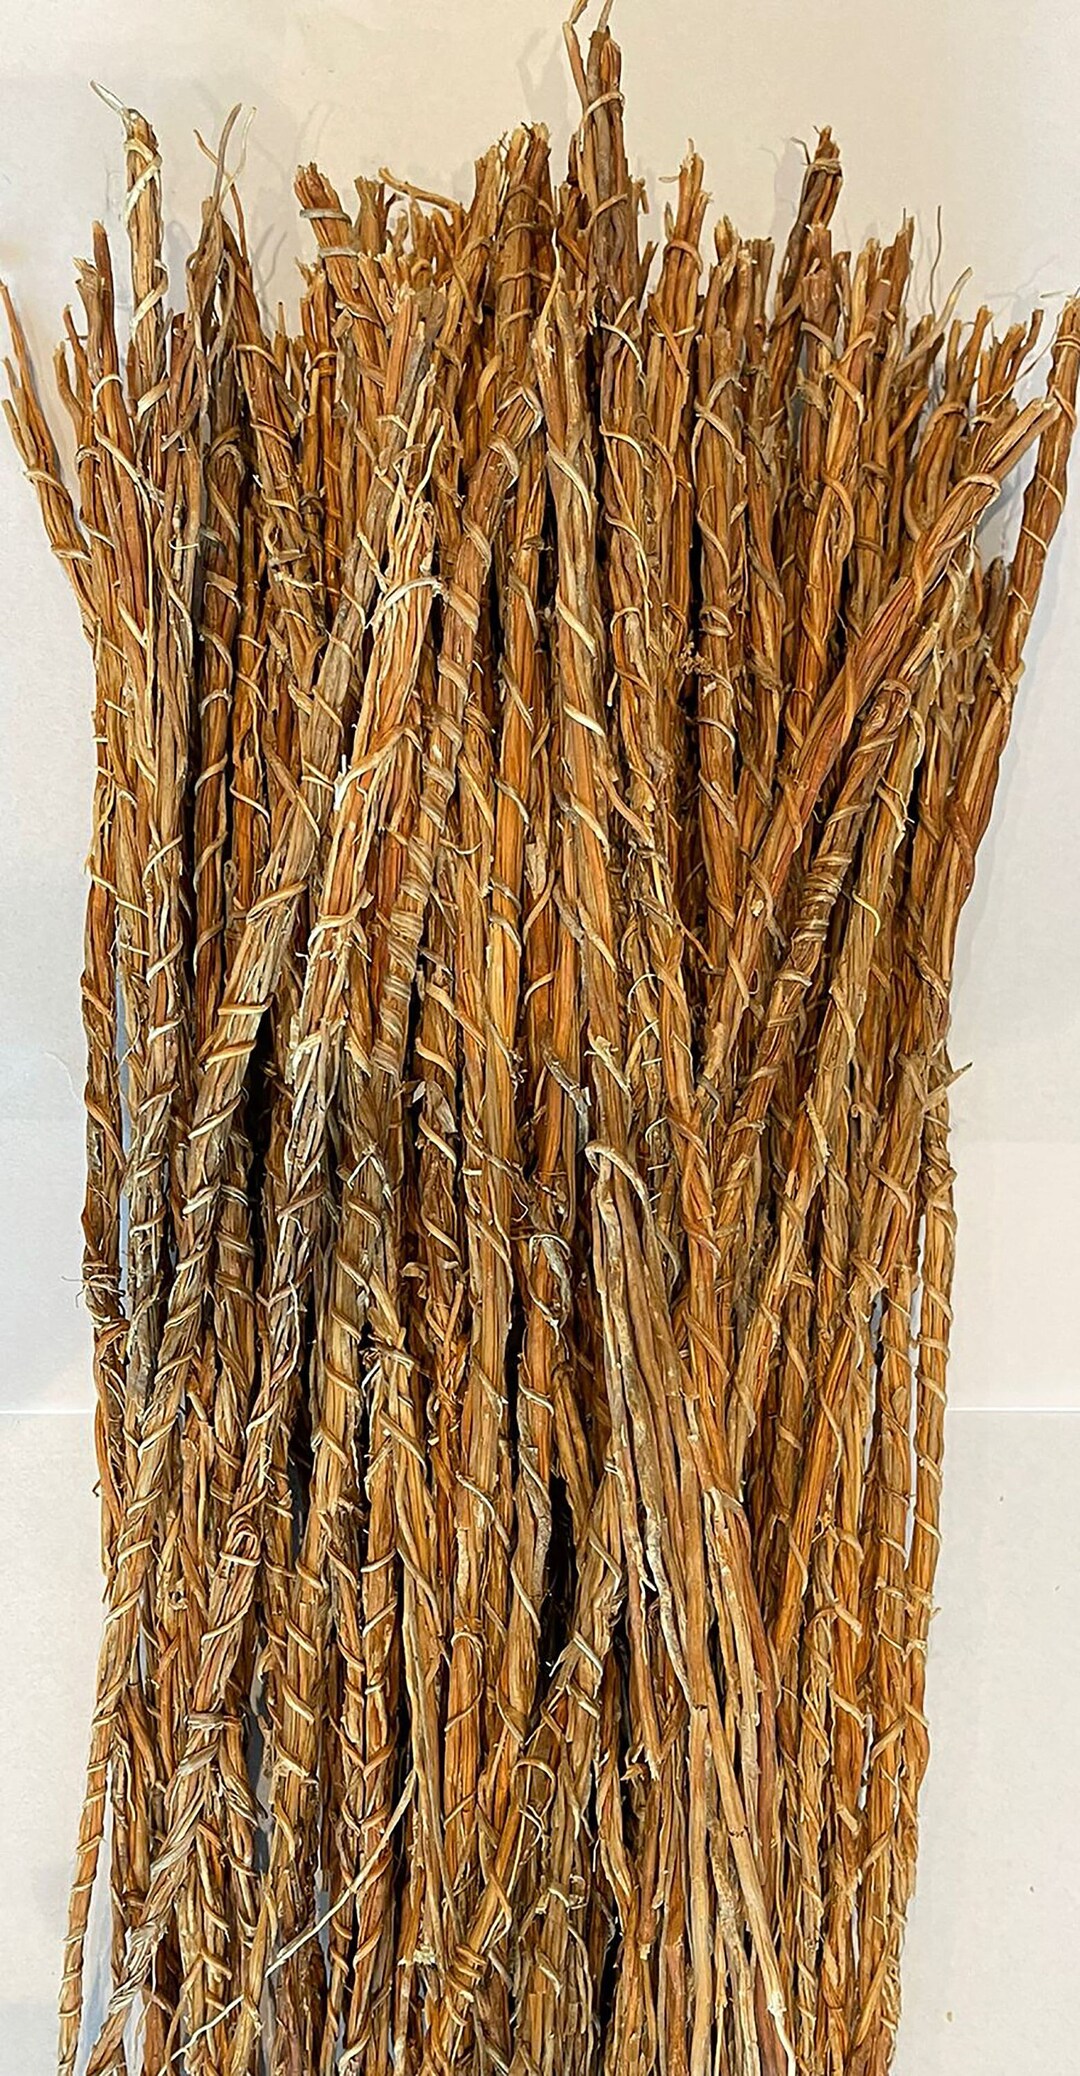 Gongolili Stems Vetiver Root Khamare Rene Sepa Root Organic From West  Africa gongoli Stems 